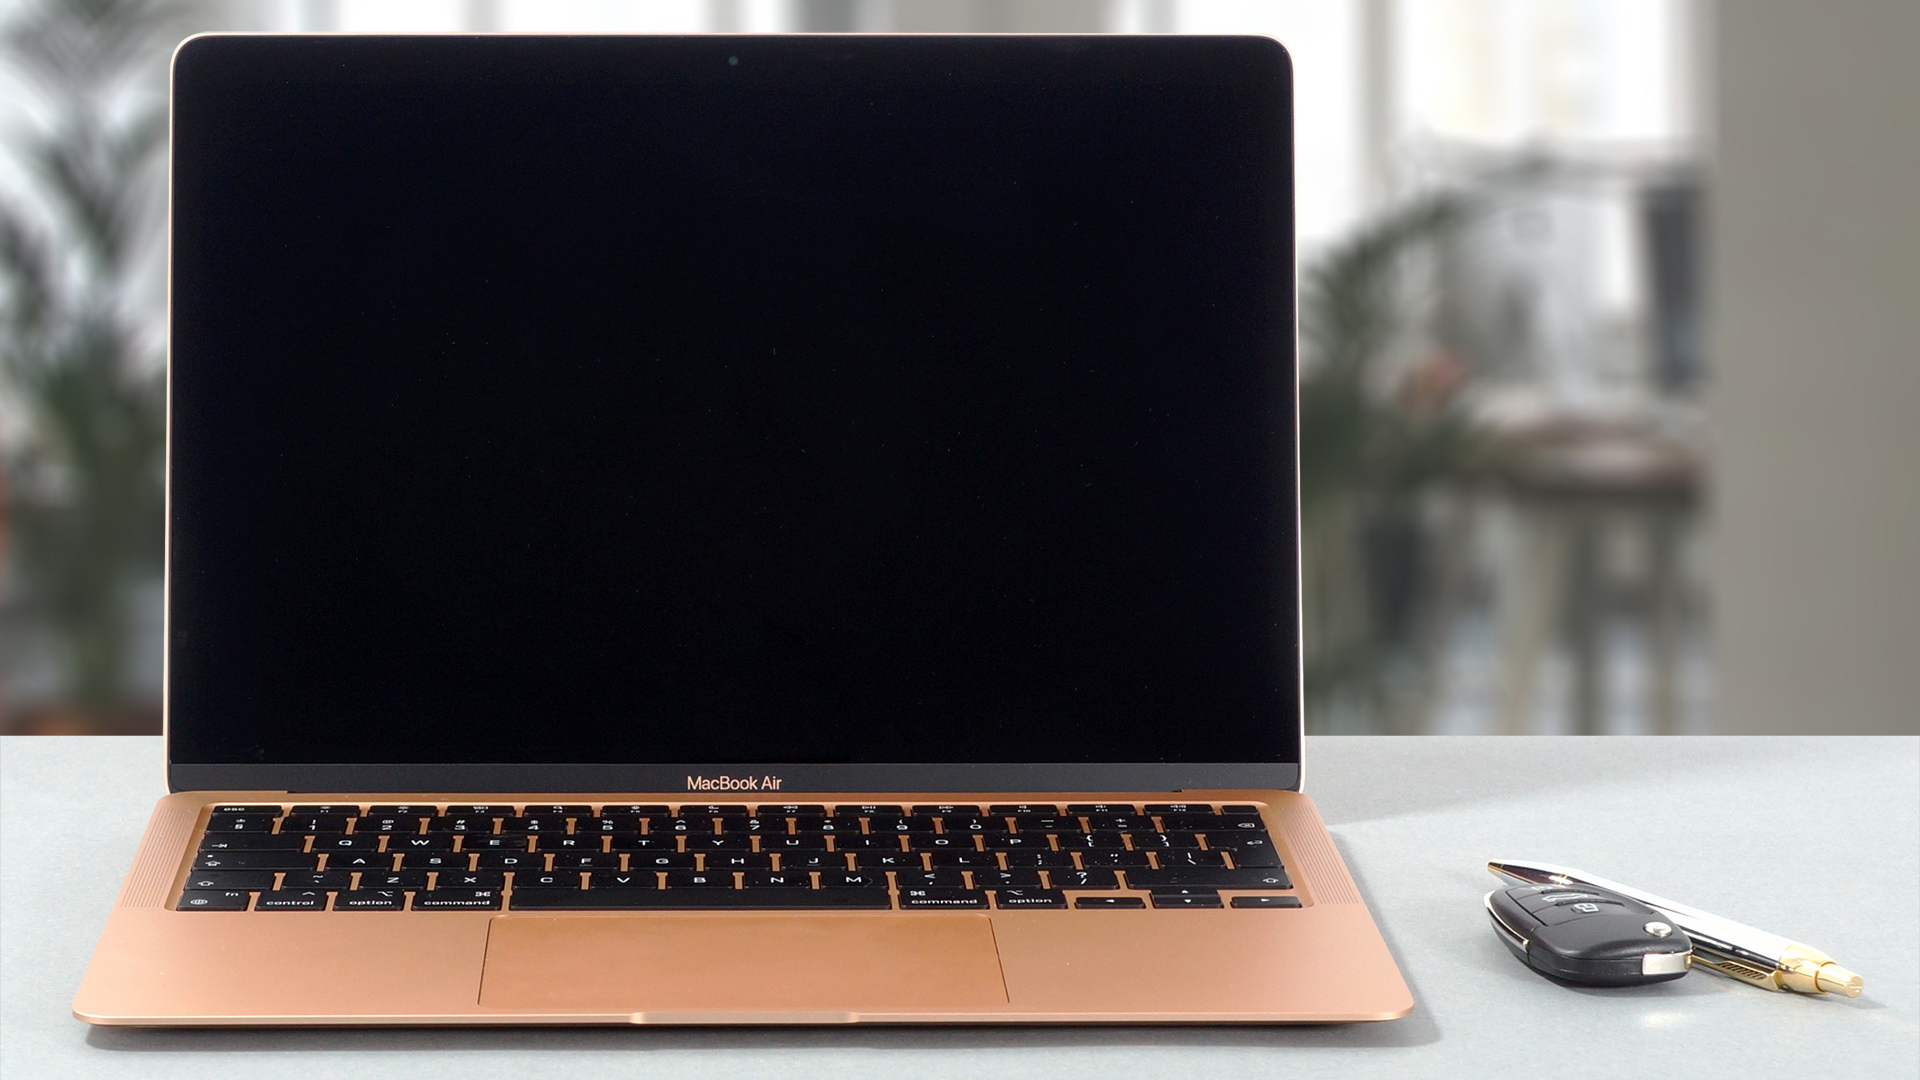 apple macbook air m1 2020 review - an image of the rose gold macbook air